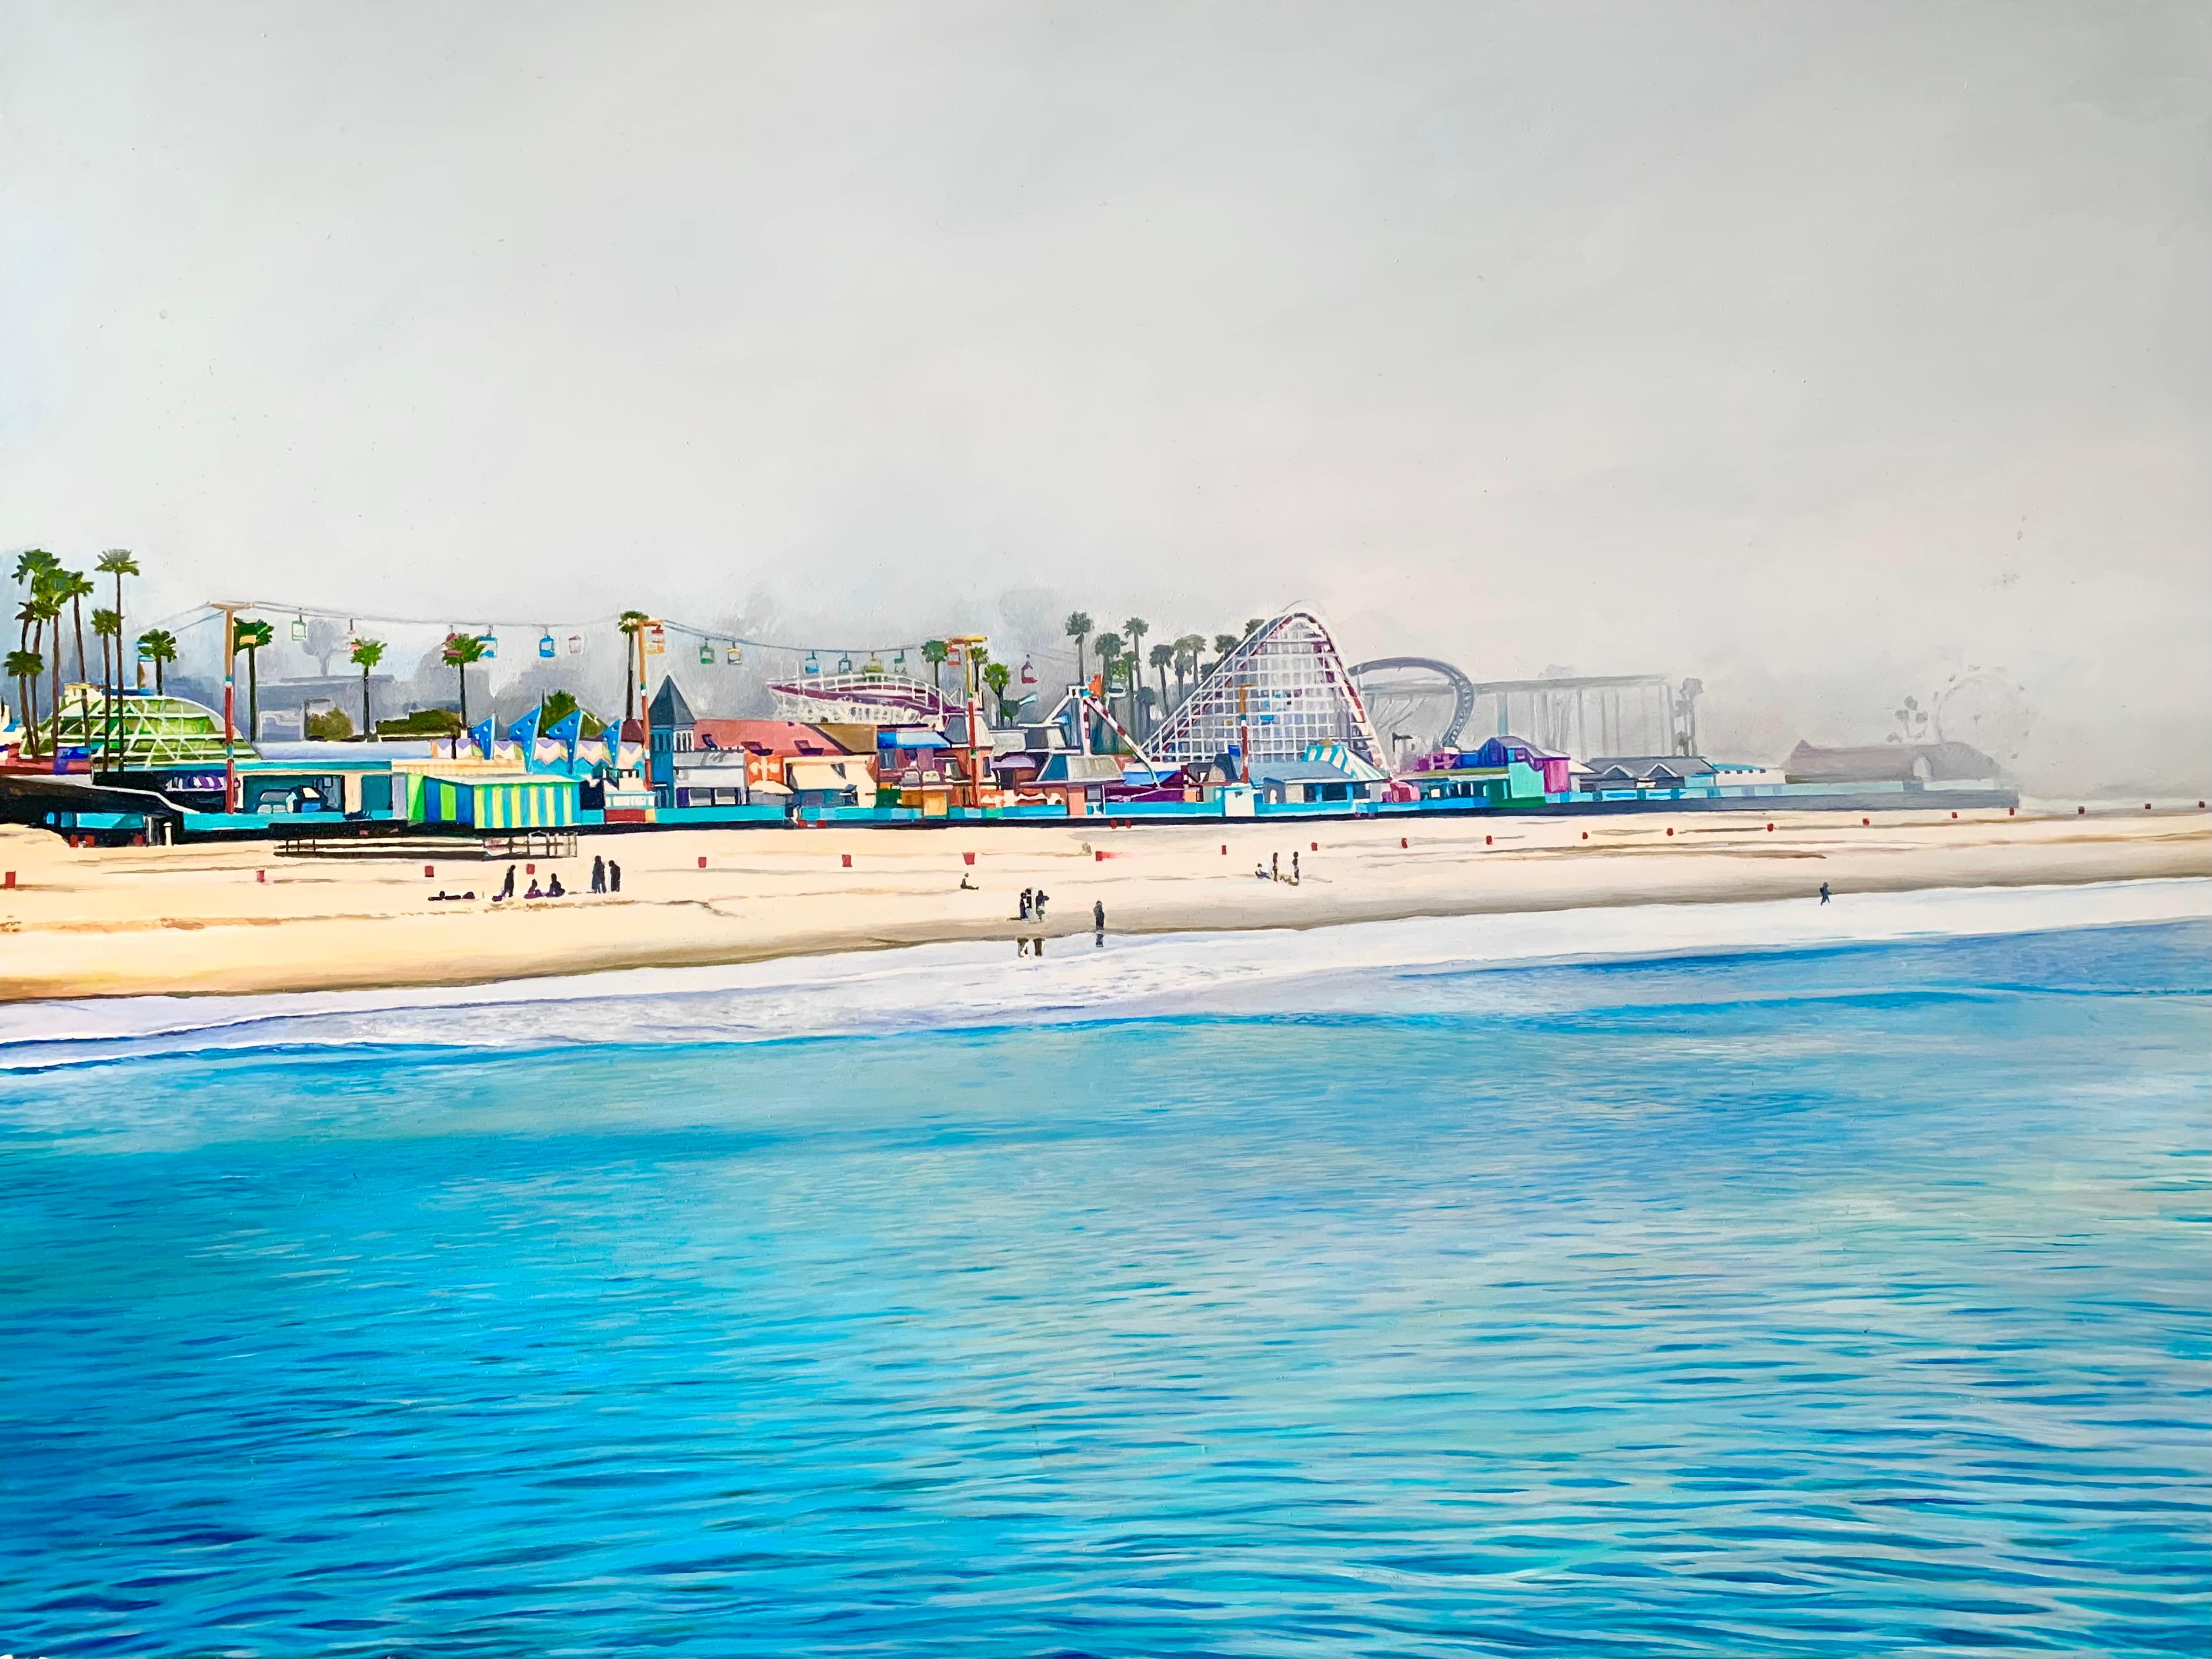 Megan Eisenberg Landscape Painting - "Santa Cruz Boardwalk" Original Oil Painting 18 in x 24 in